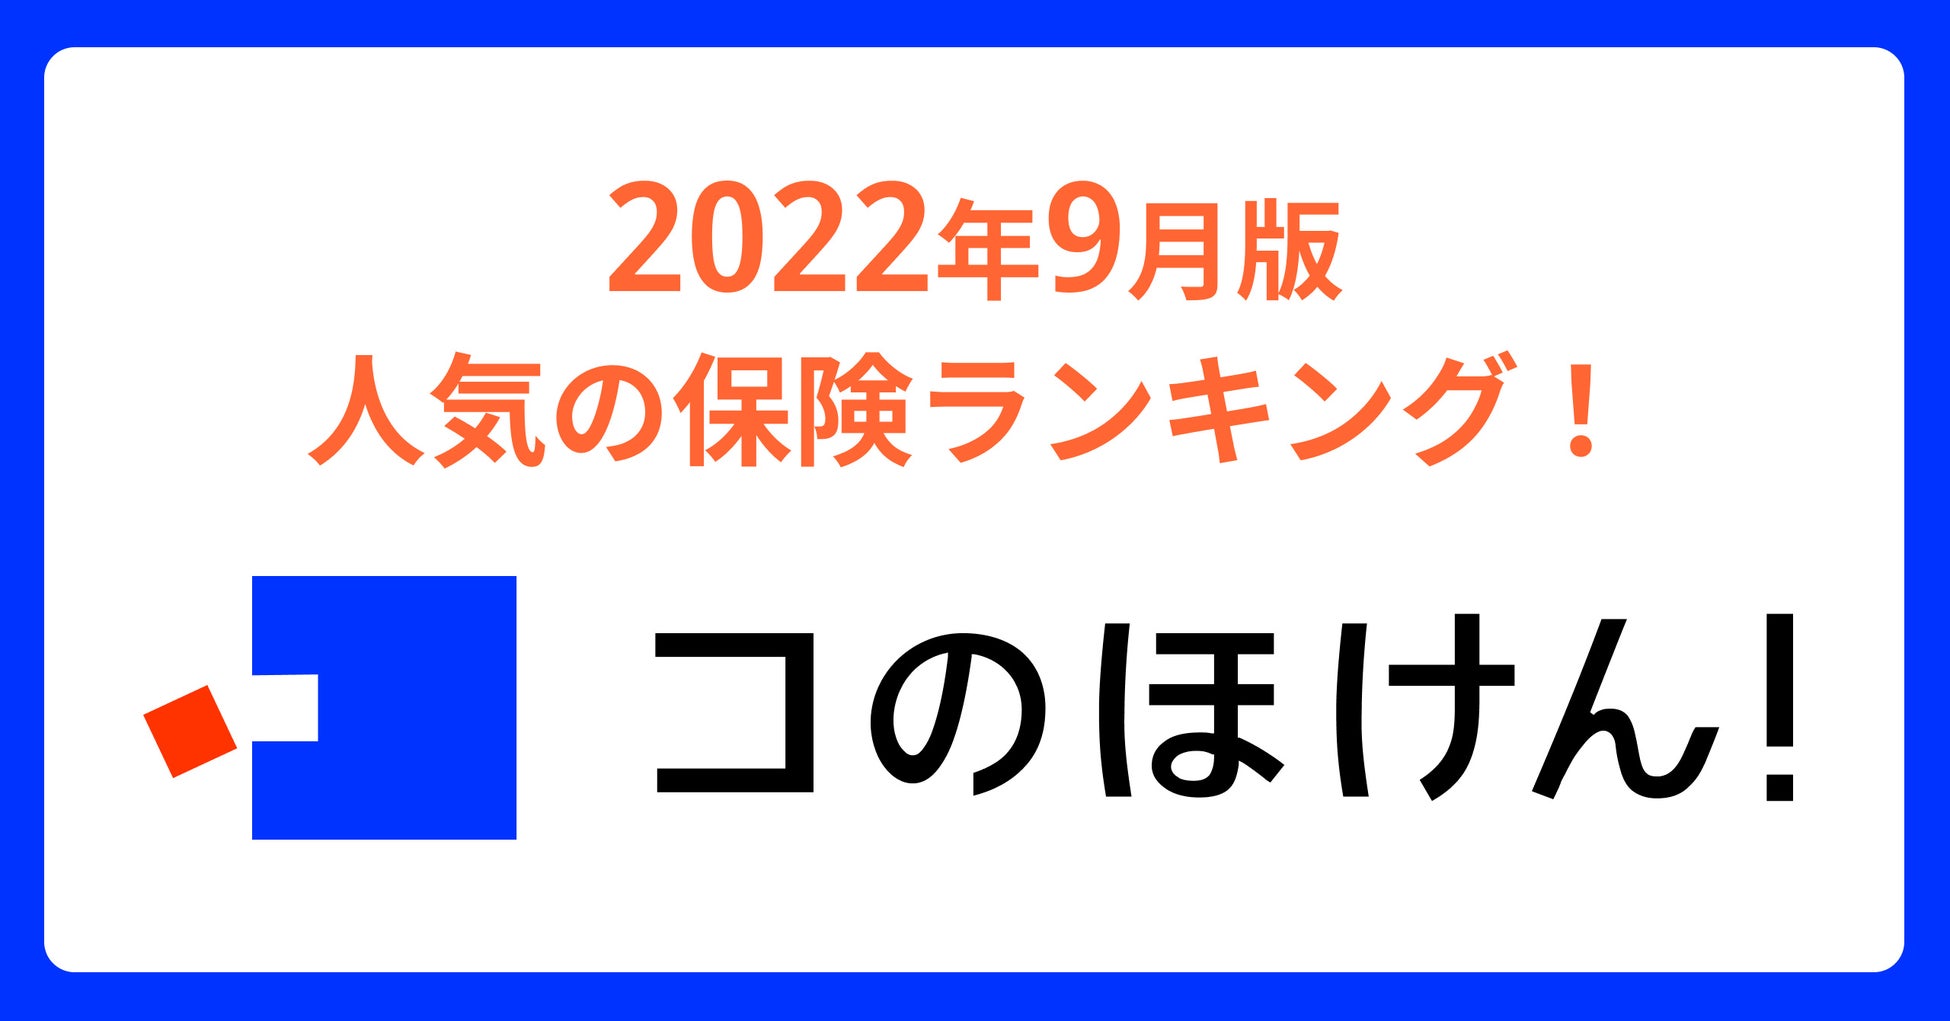 FUKUOKA DIGITAL DAYS 2022 ～ふれよう！#デジタルのチカラ～」の開催および参加者募集について